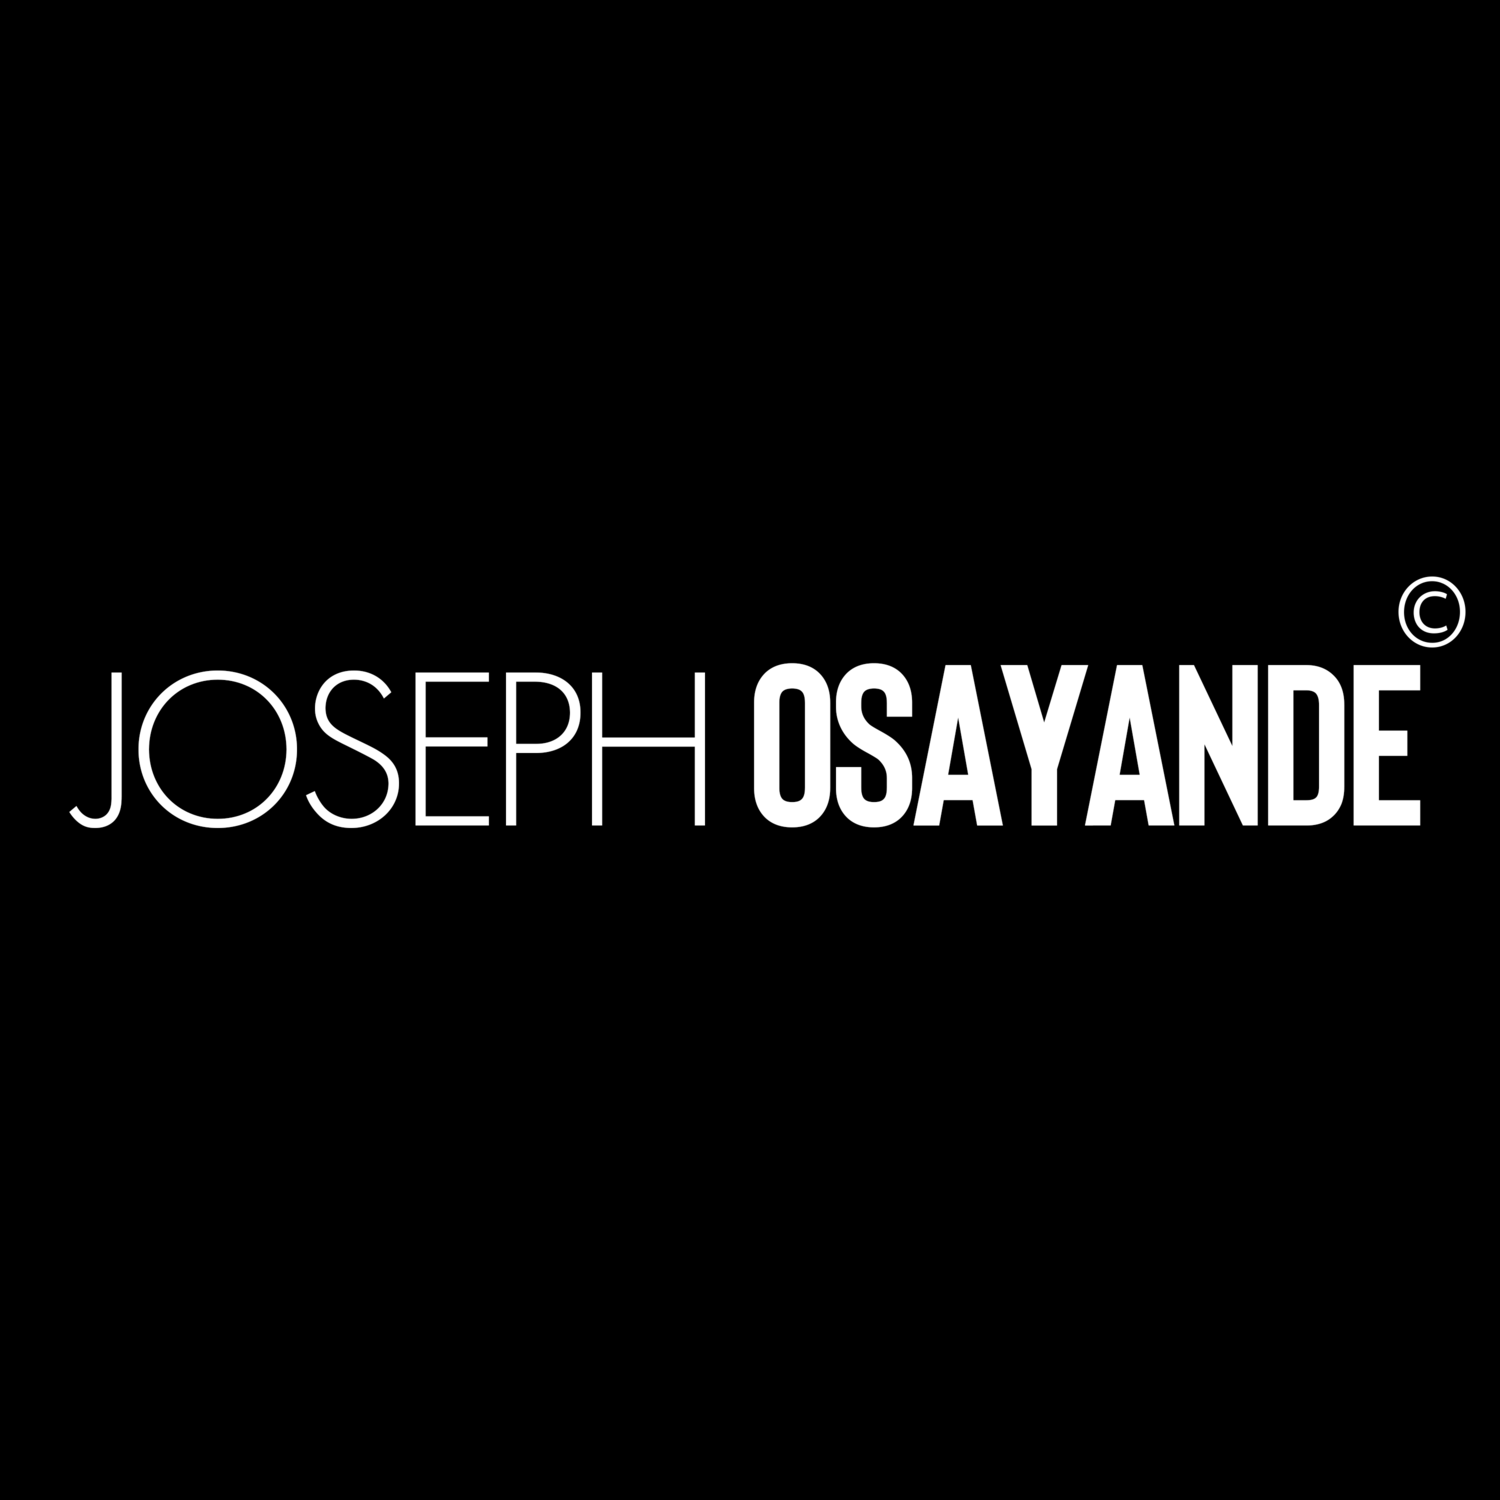 Joseph Osayande Porfolio